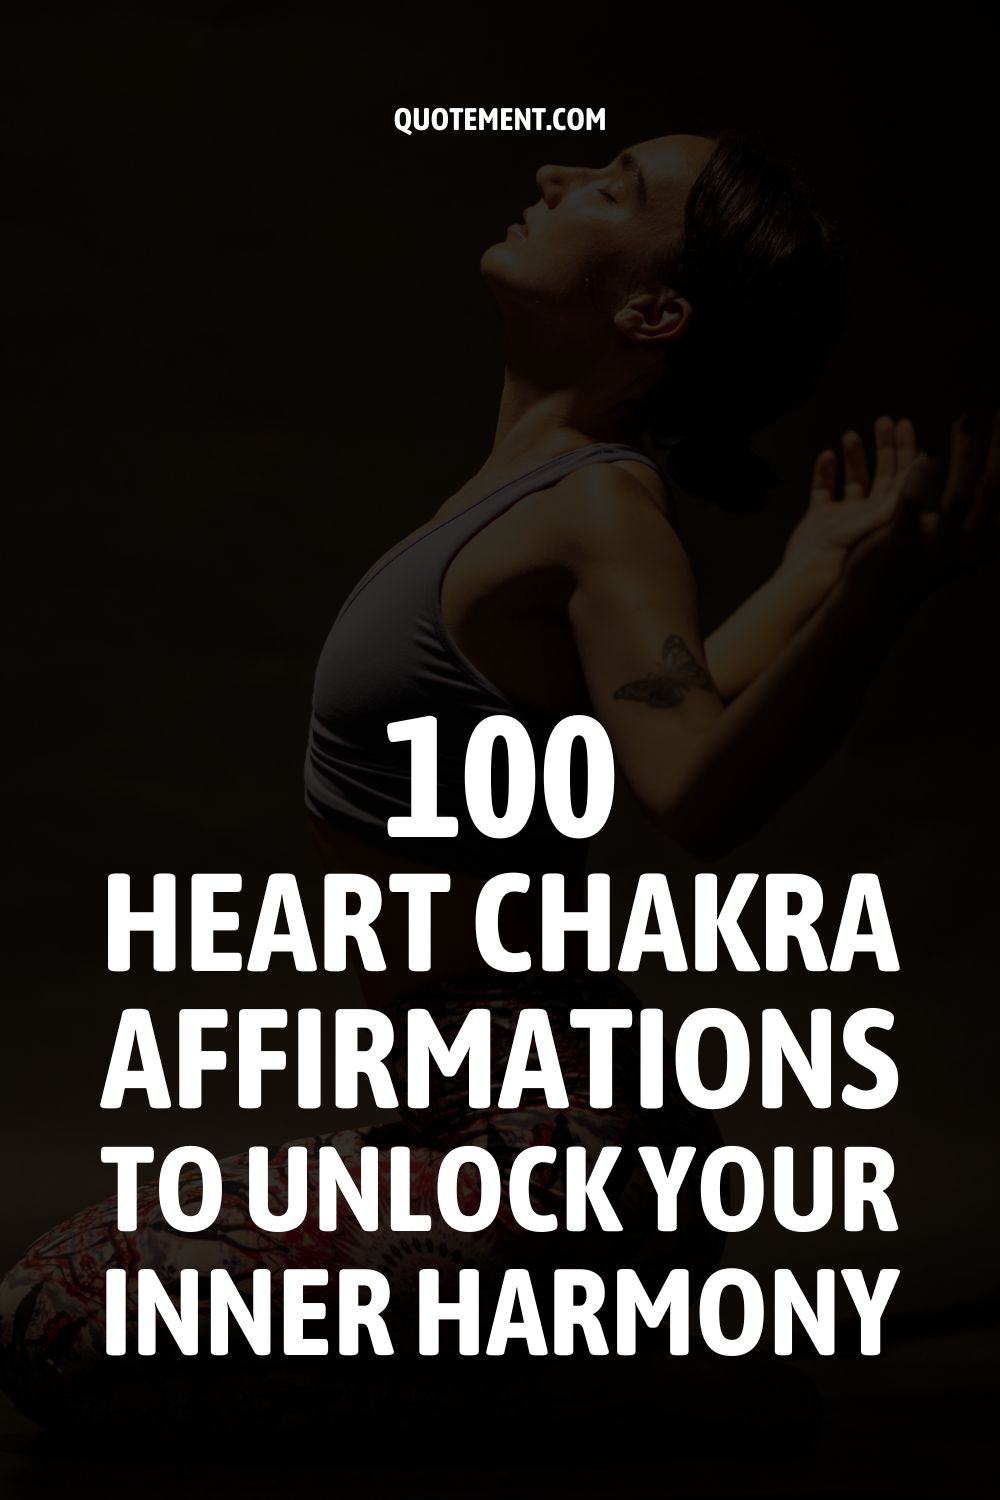 100 Heart Chakra Affirmations To Unlock Your Inner Harmony
